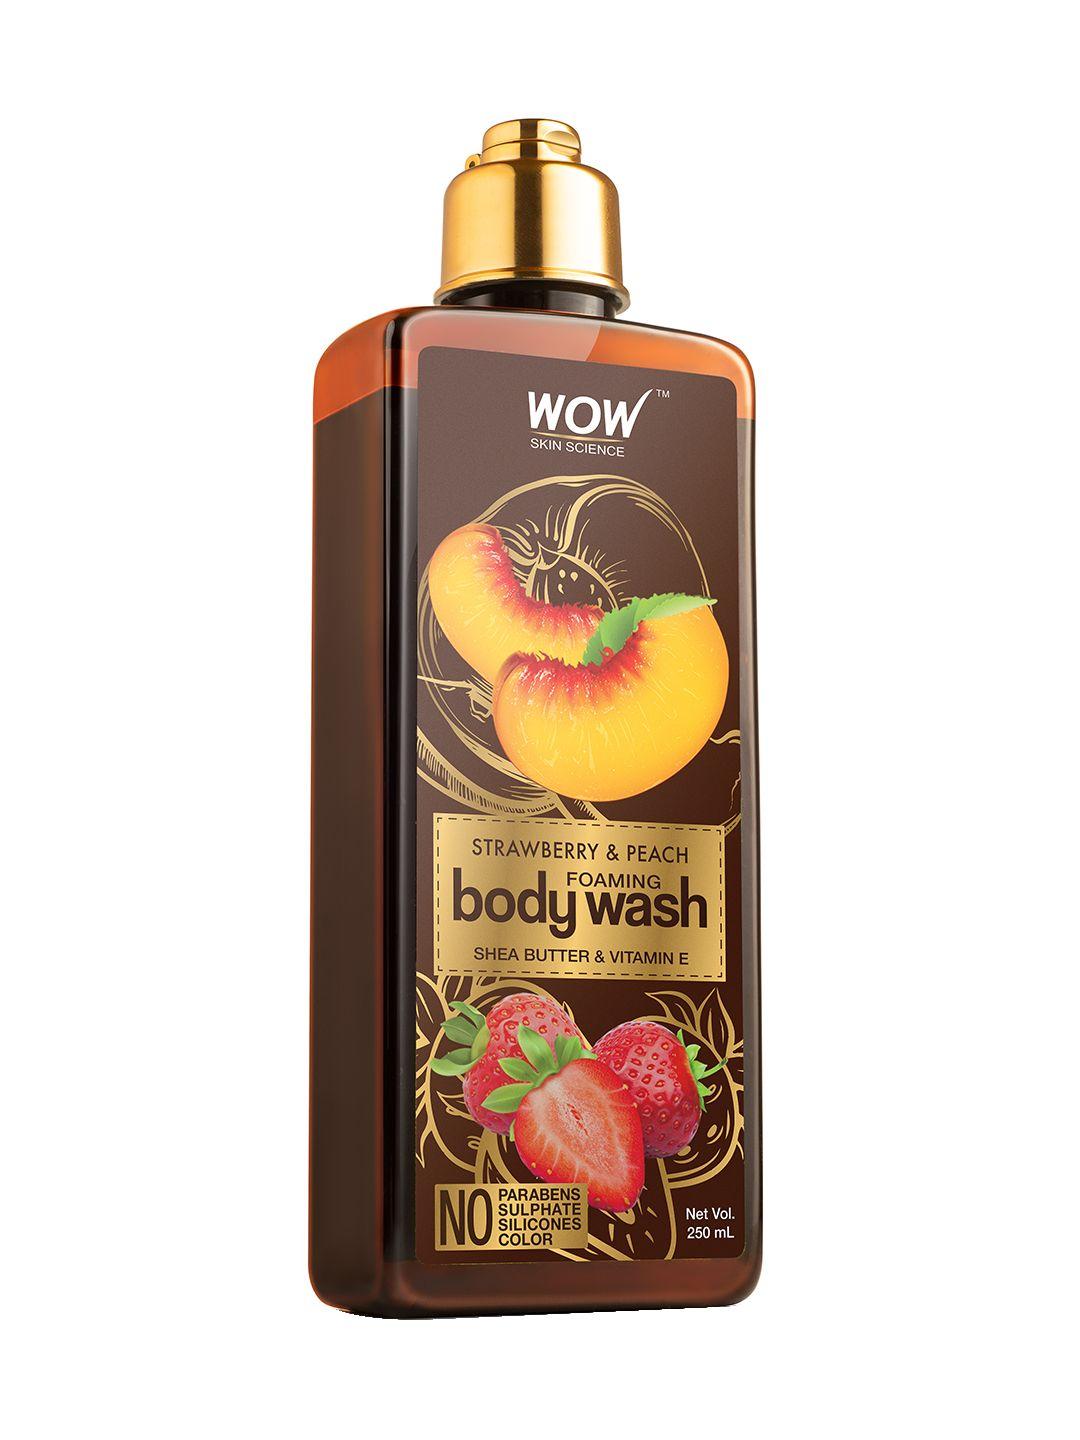 wow skin science strawberry & peach foaming body wash 250 ml